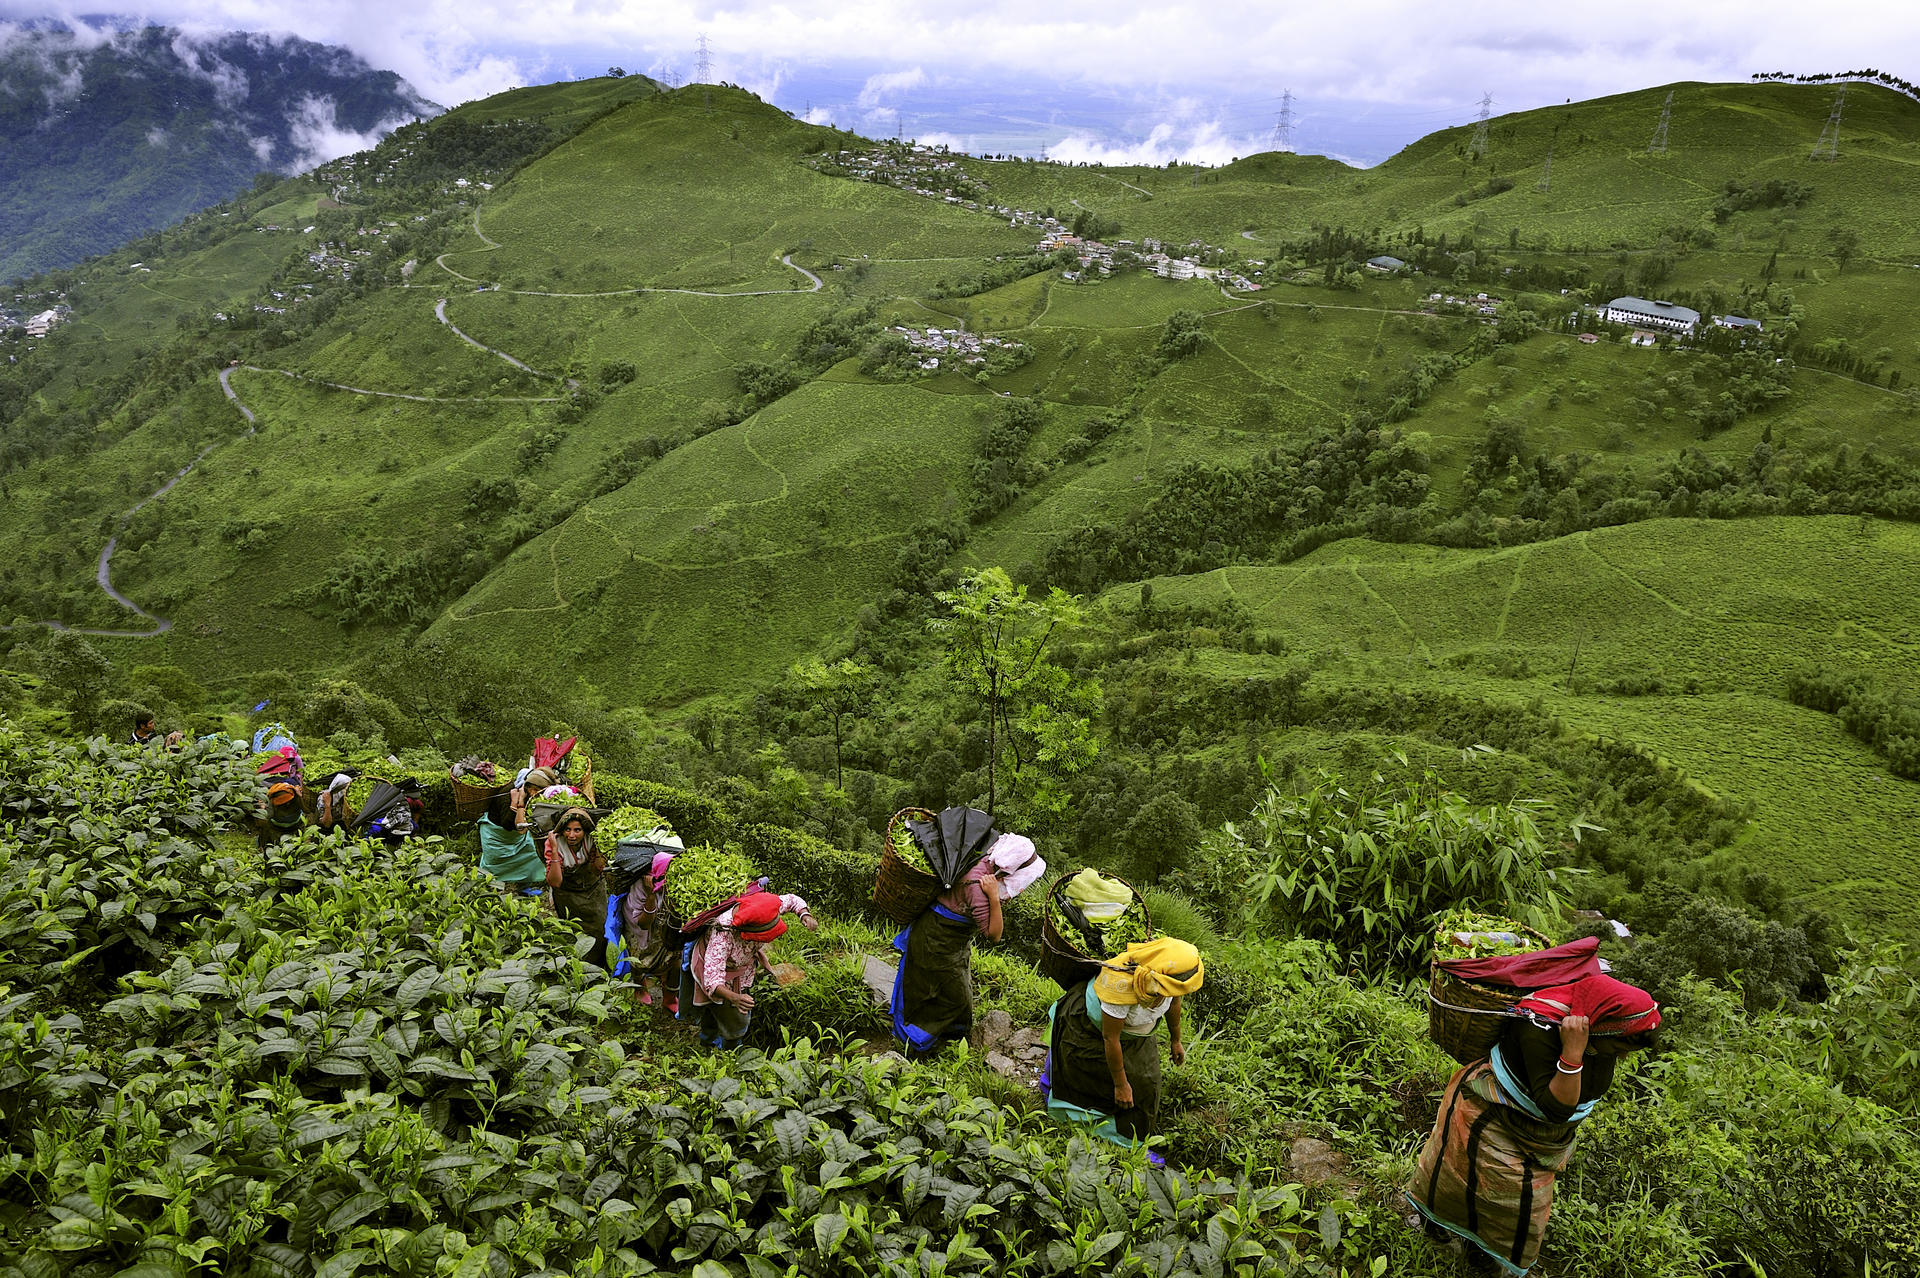 In Darjeeling the tea leaves are always plucked by hand by women. Photo: Shutterstock